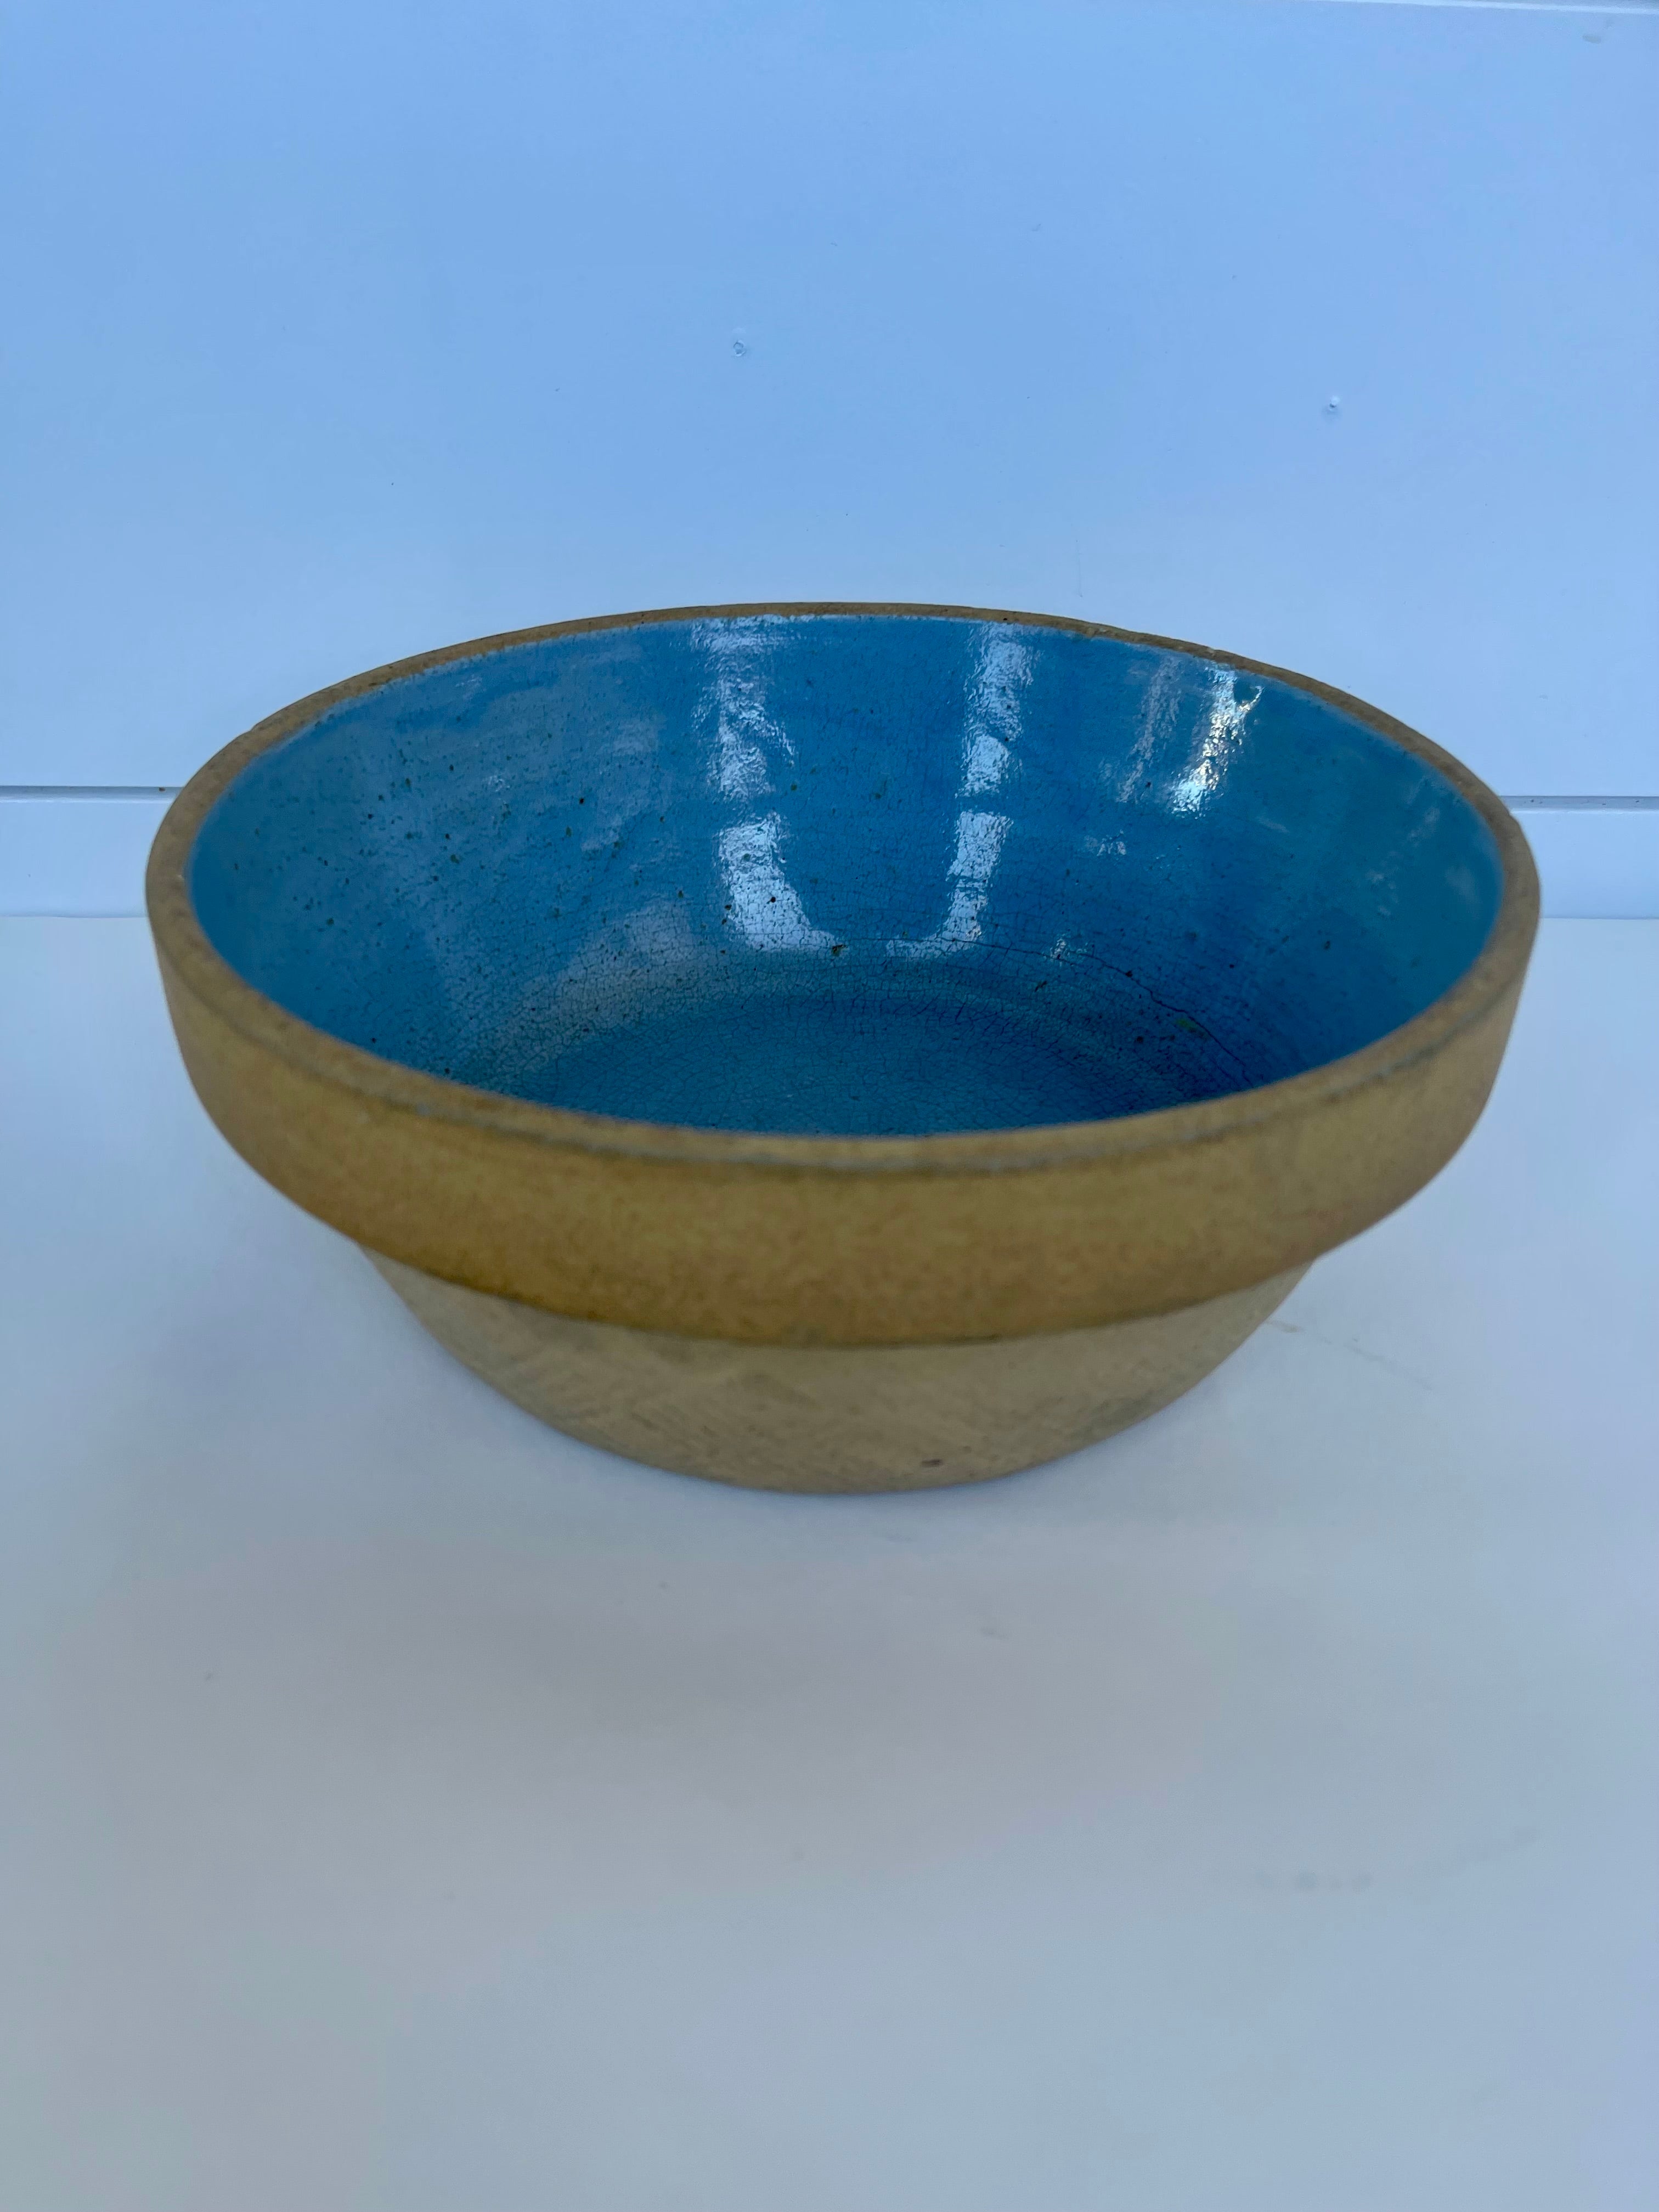 Vintage stoneware bowl with beautiful blue glazed interior